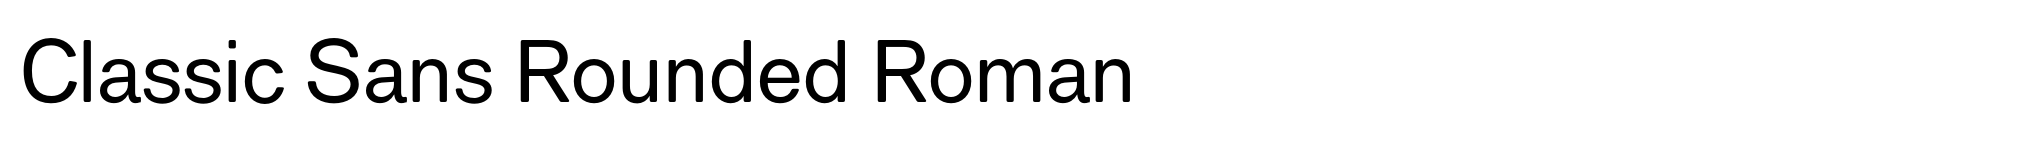 Classic Sans Rounded Roman image